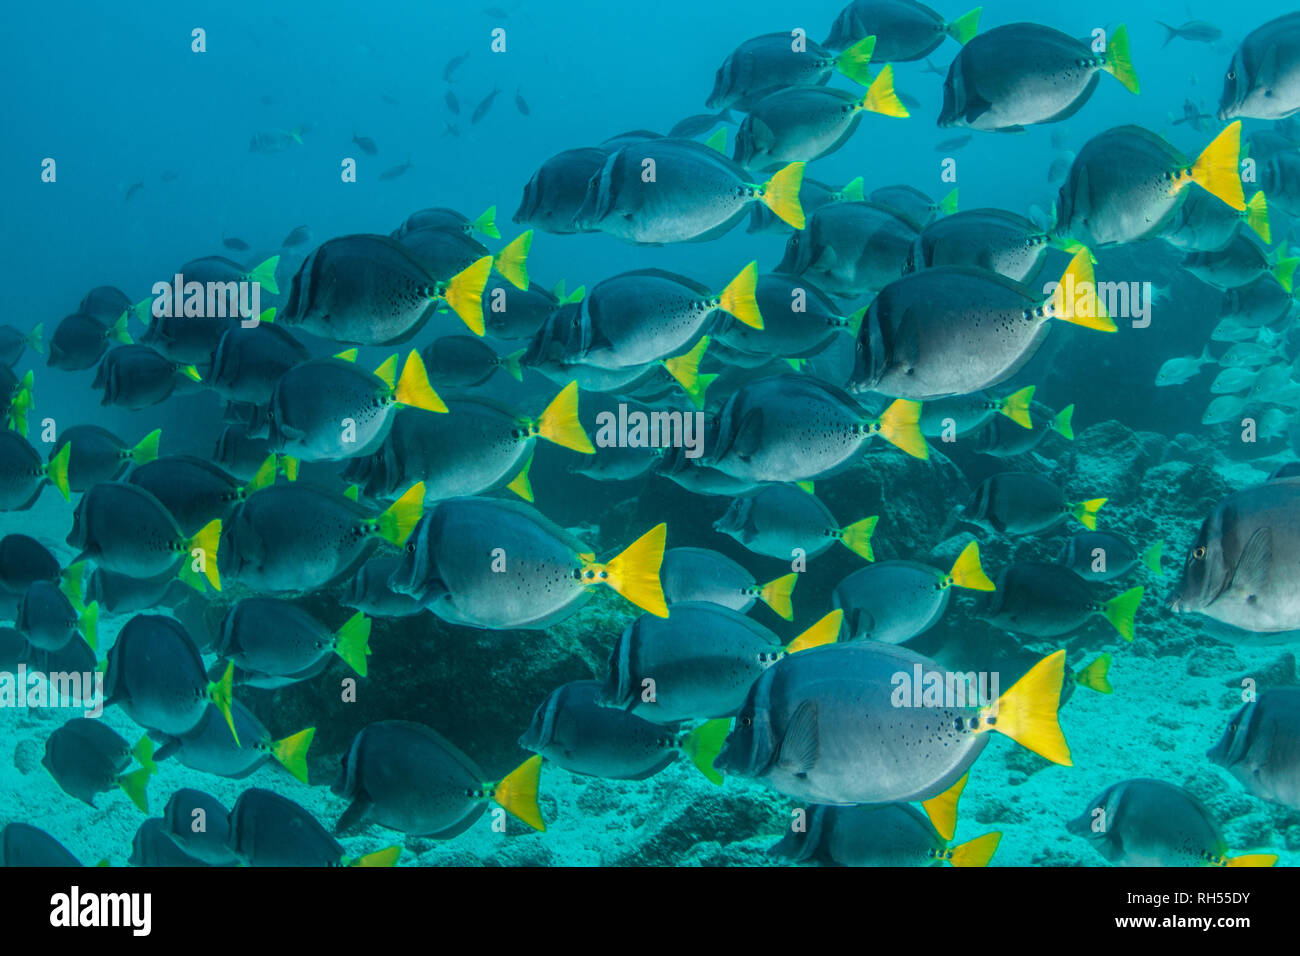 A shoal of yellowtail surgeon fish Stock Photo